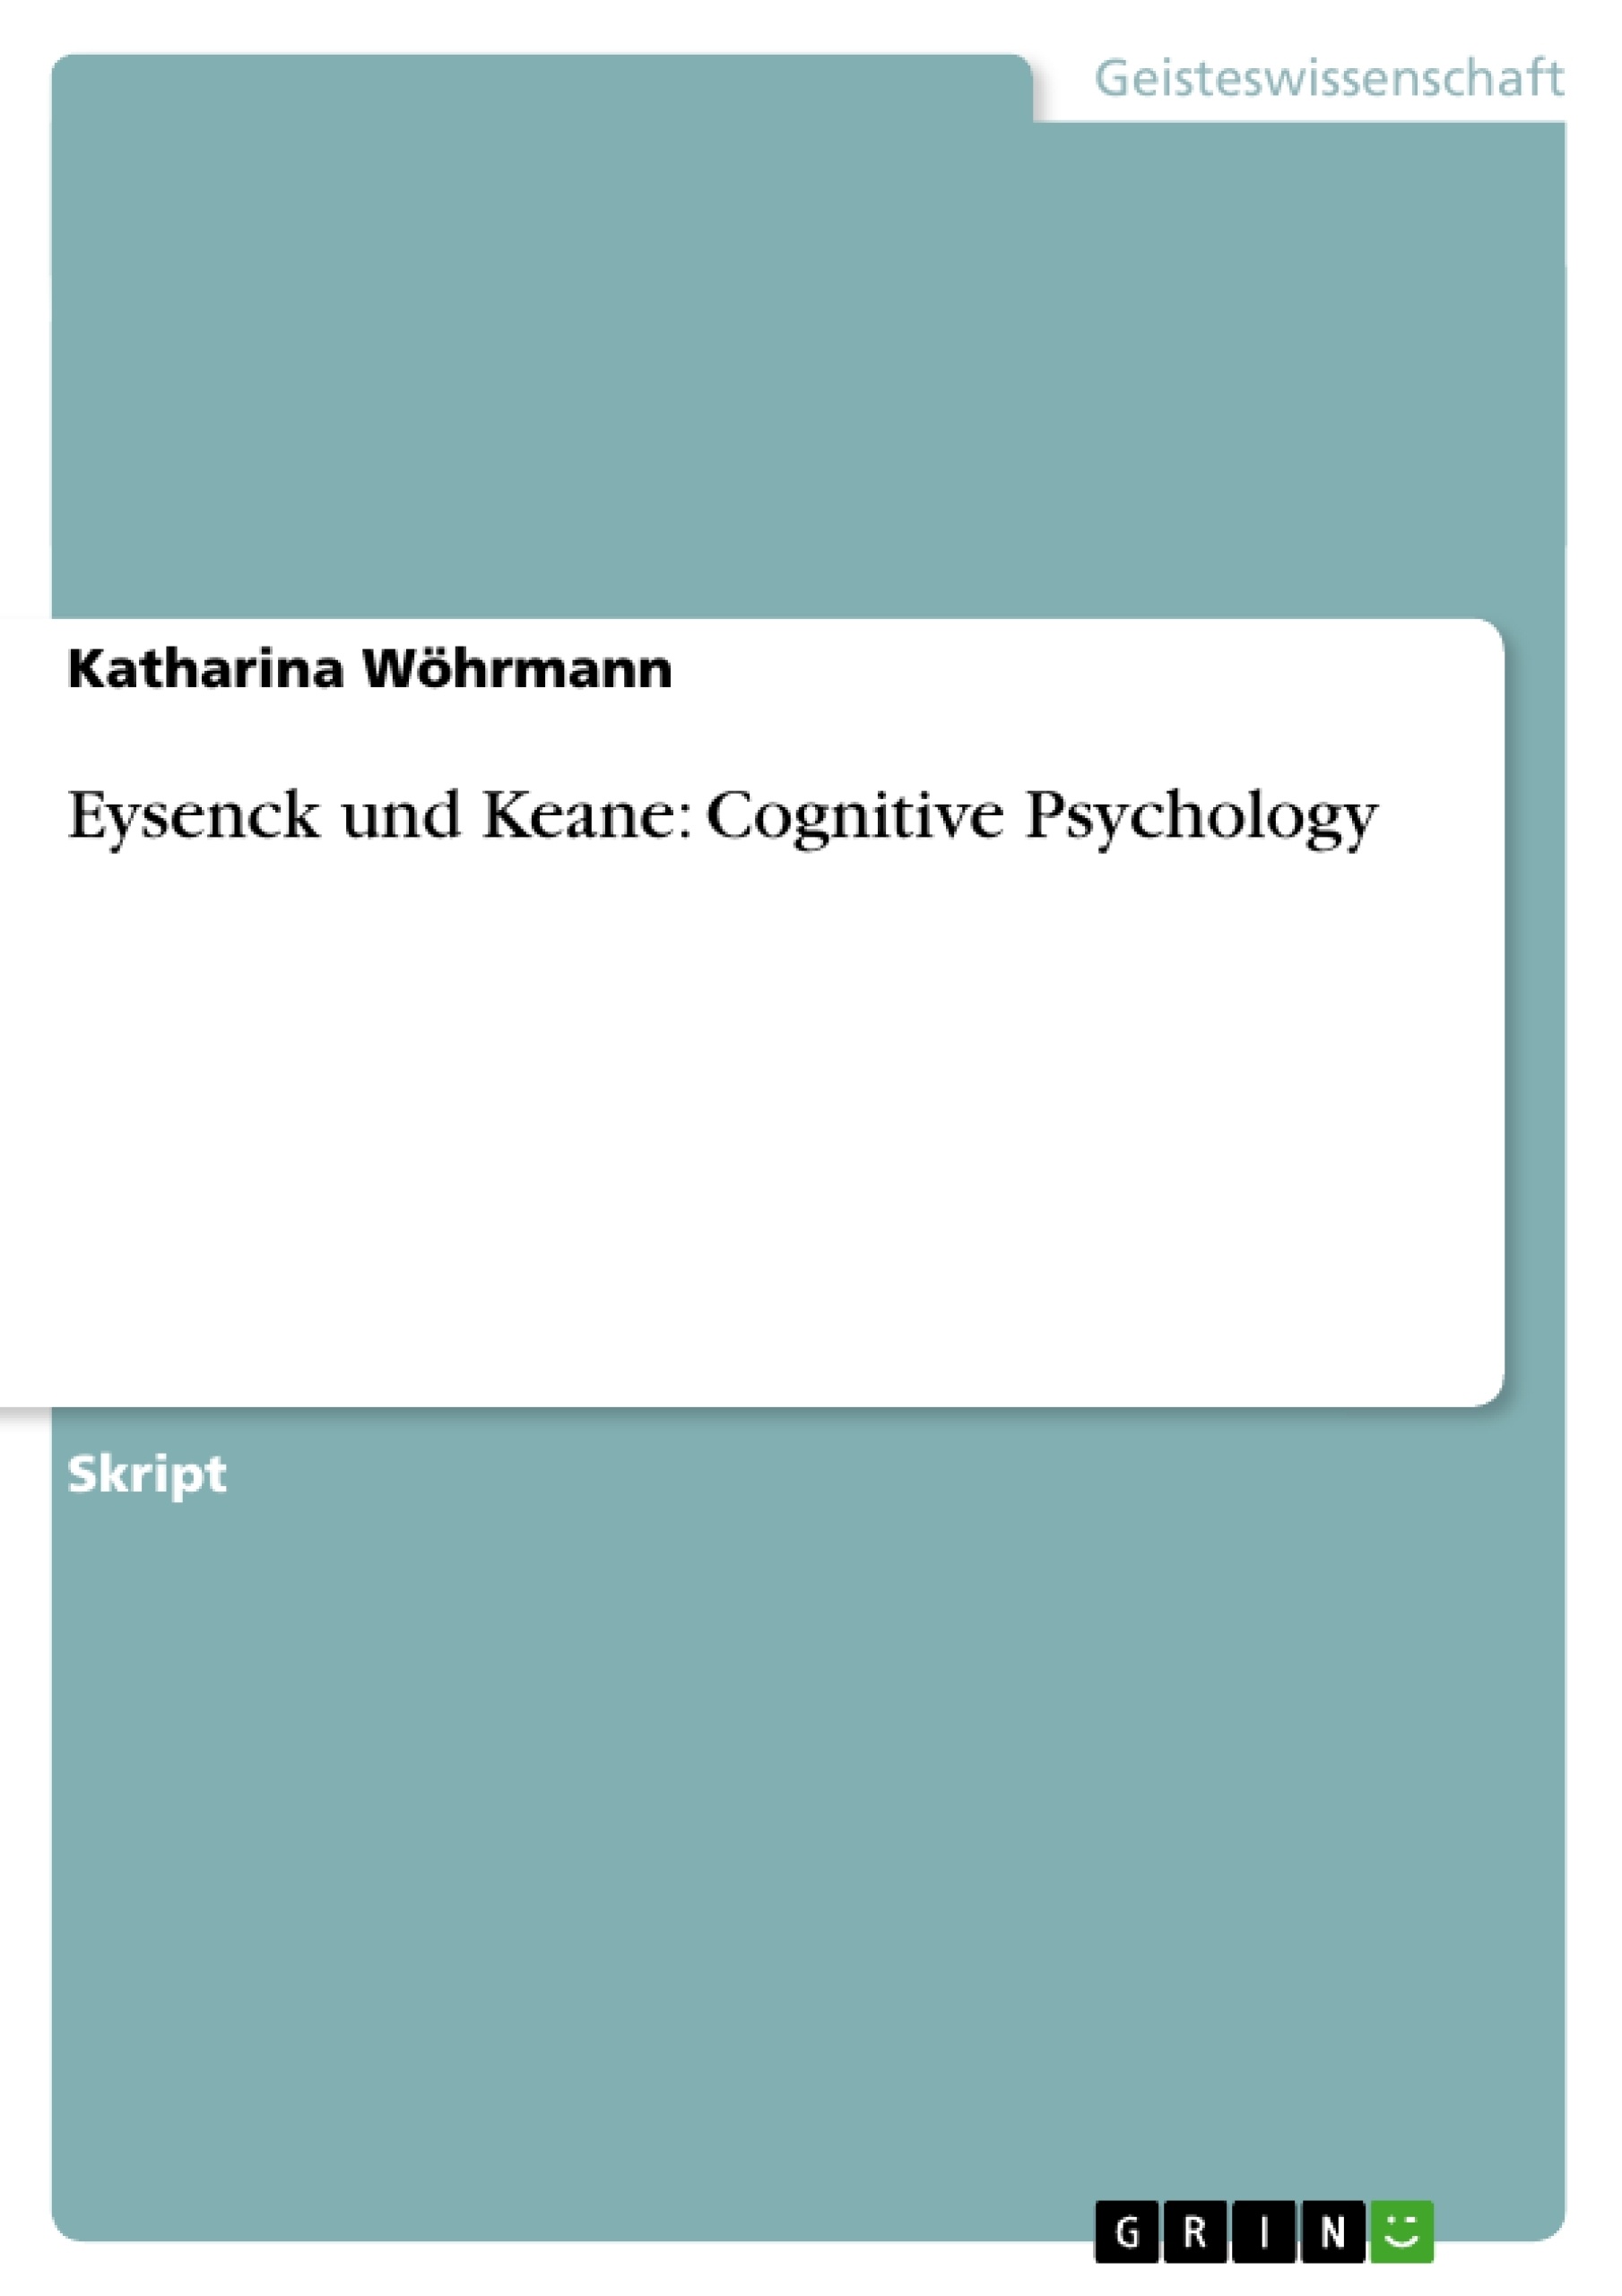 Title: Eysenck und Keane: Cognitive Psychology